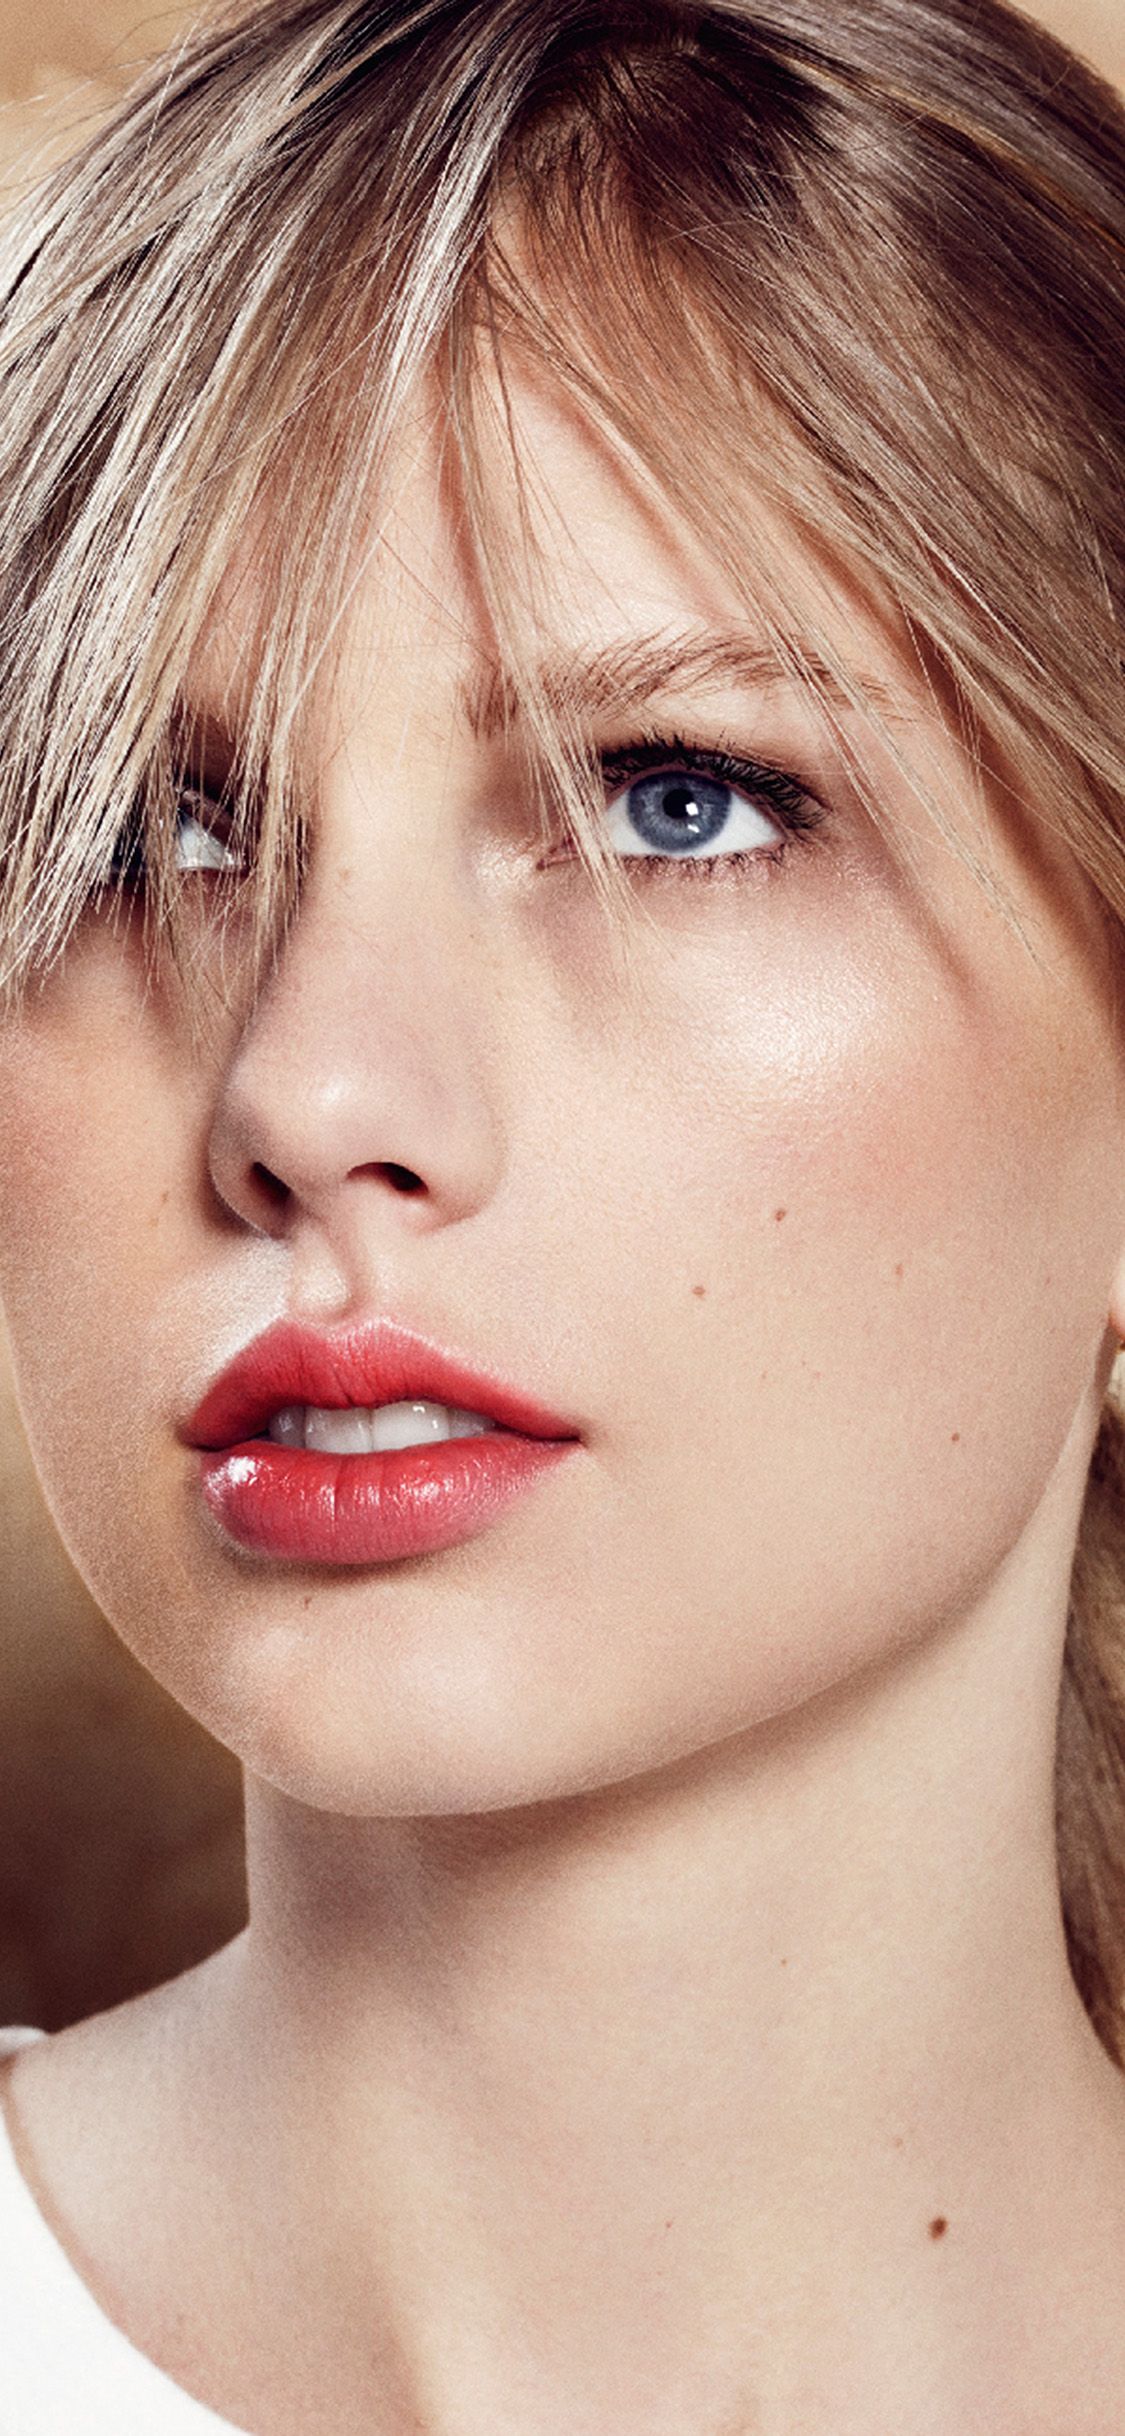 Taylor Swift Face Girl Music Artist